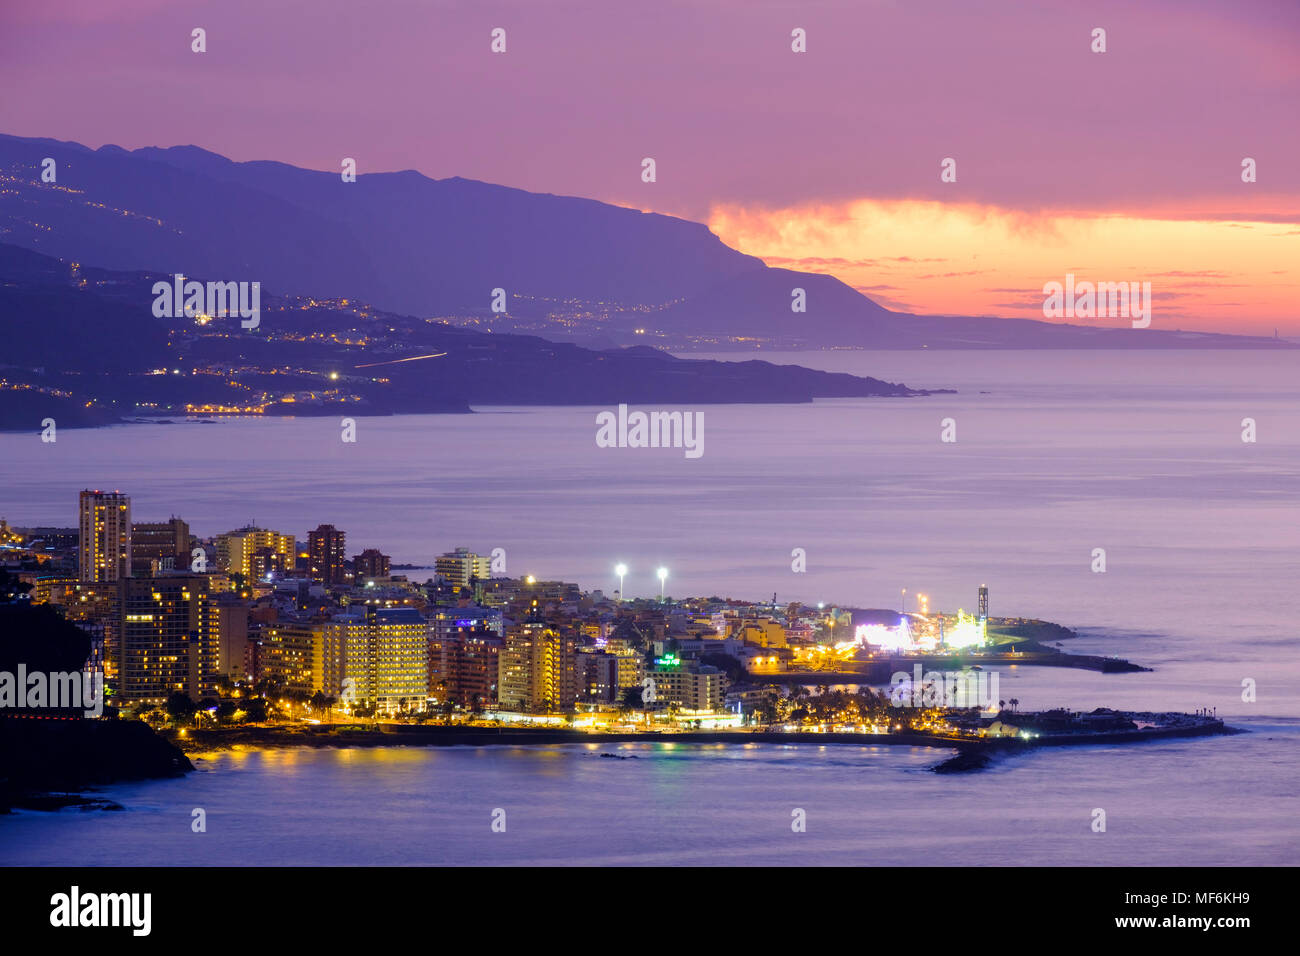 Puerto de la Cruz, Abend, Teneriffa, Kanarische Inseln, Spanien Stockfoto